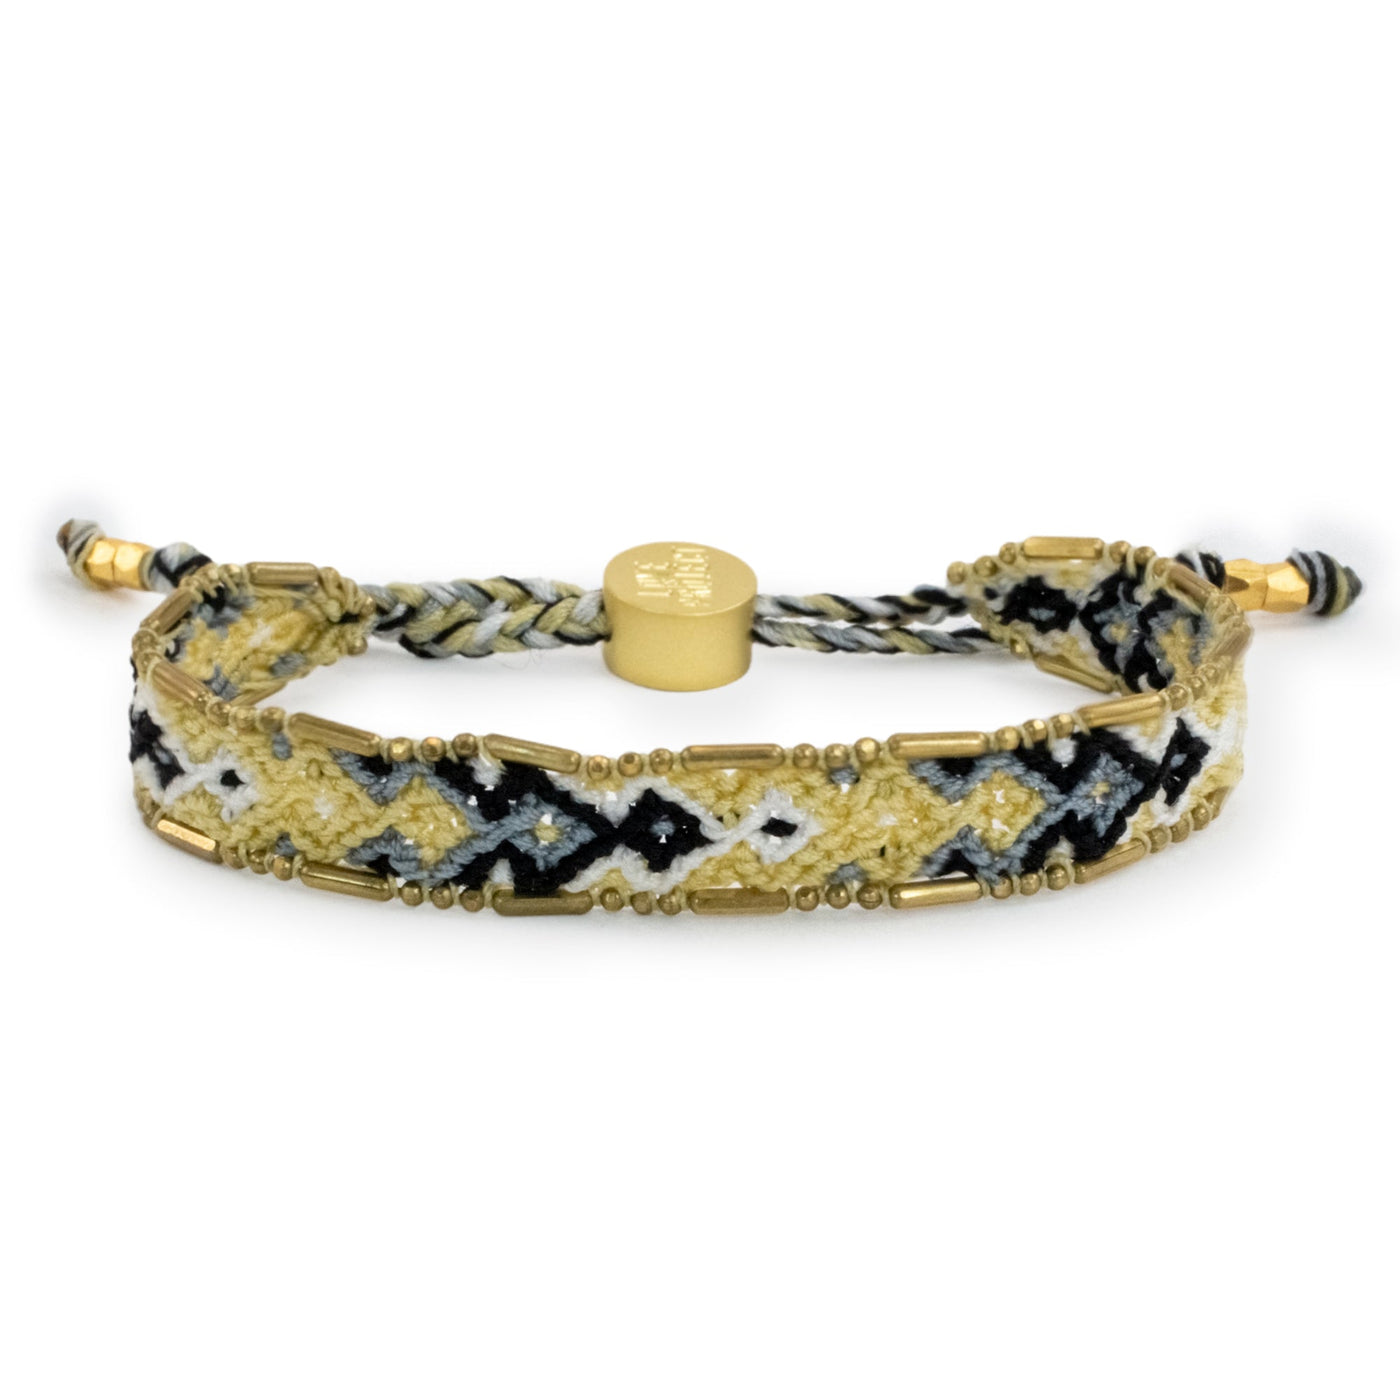 Bali Friendship Bracelet - Pebble Gold